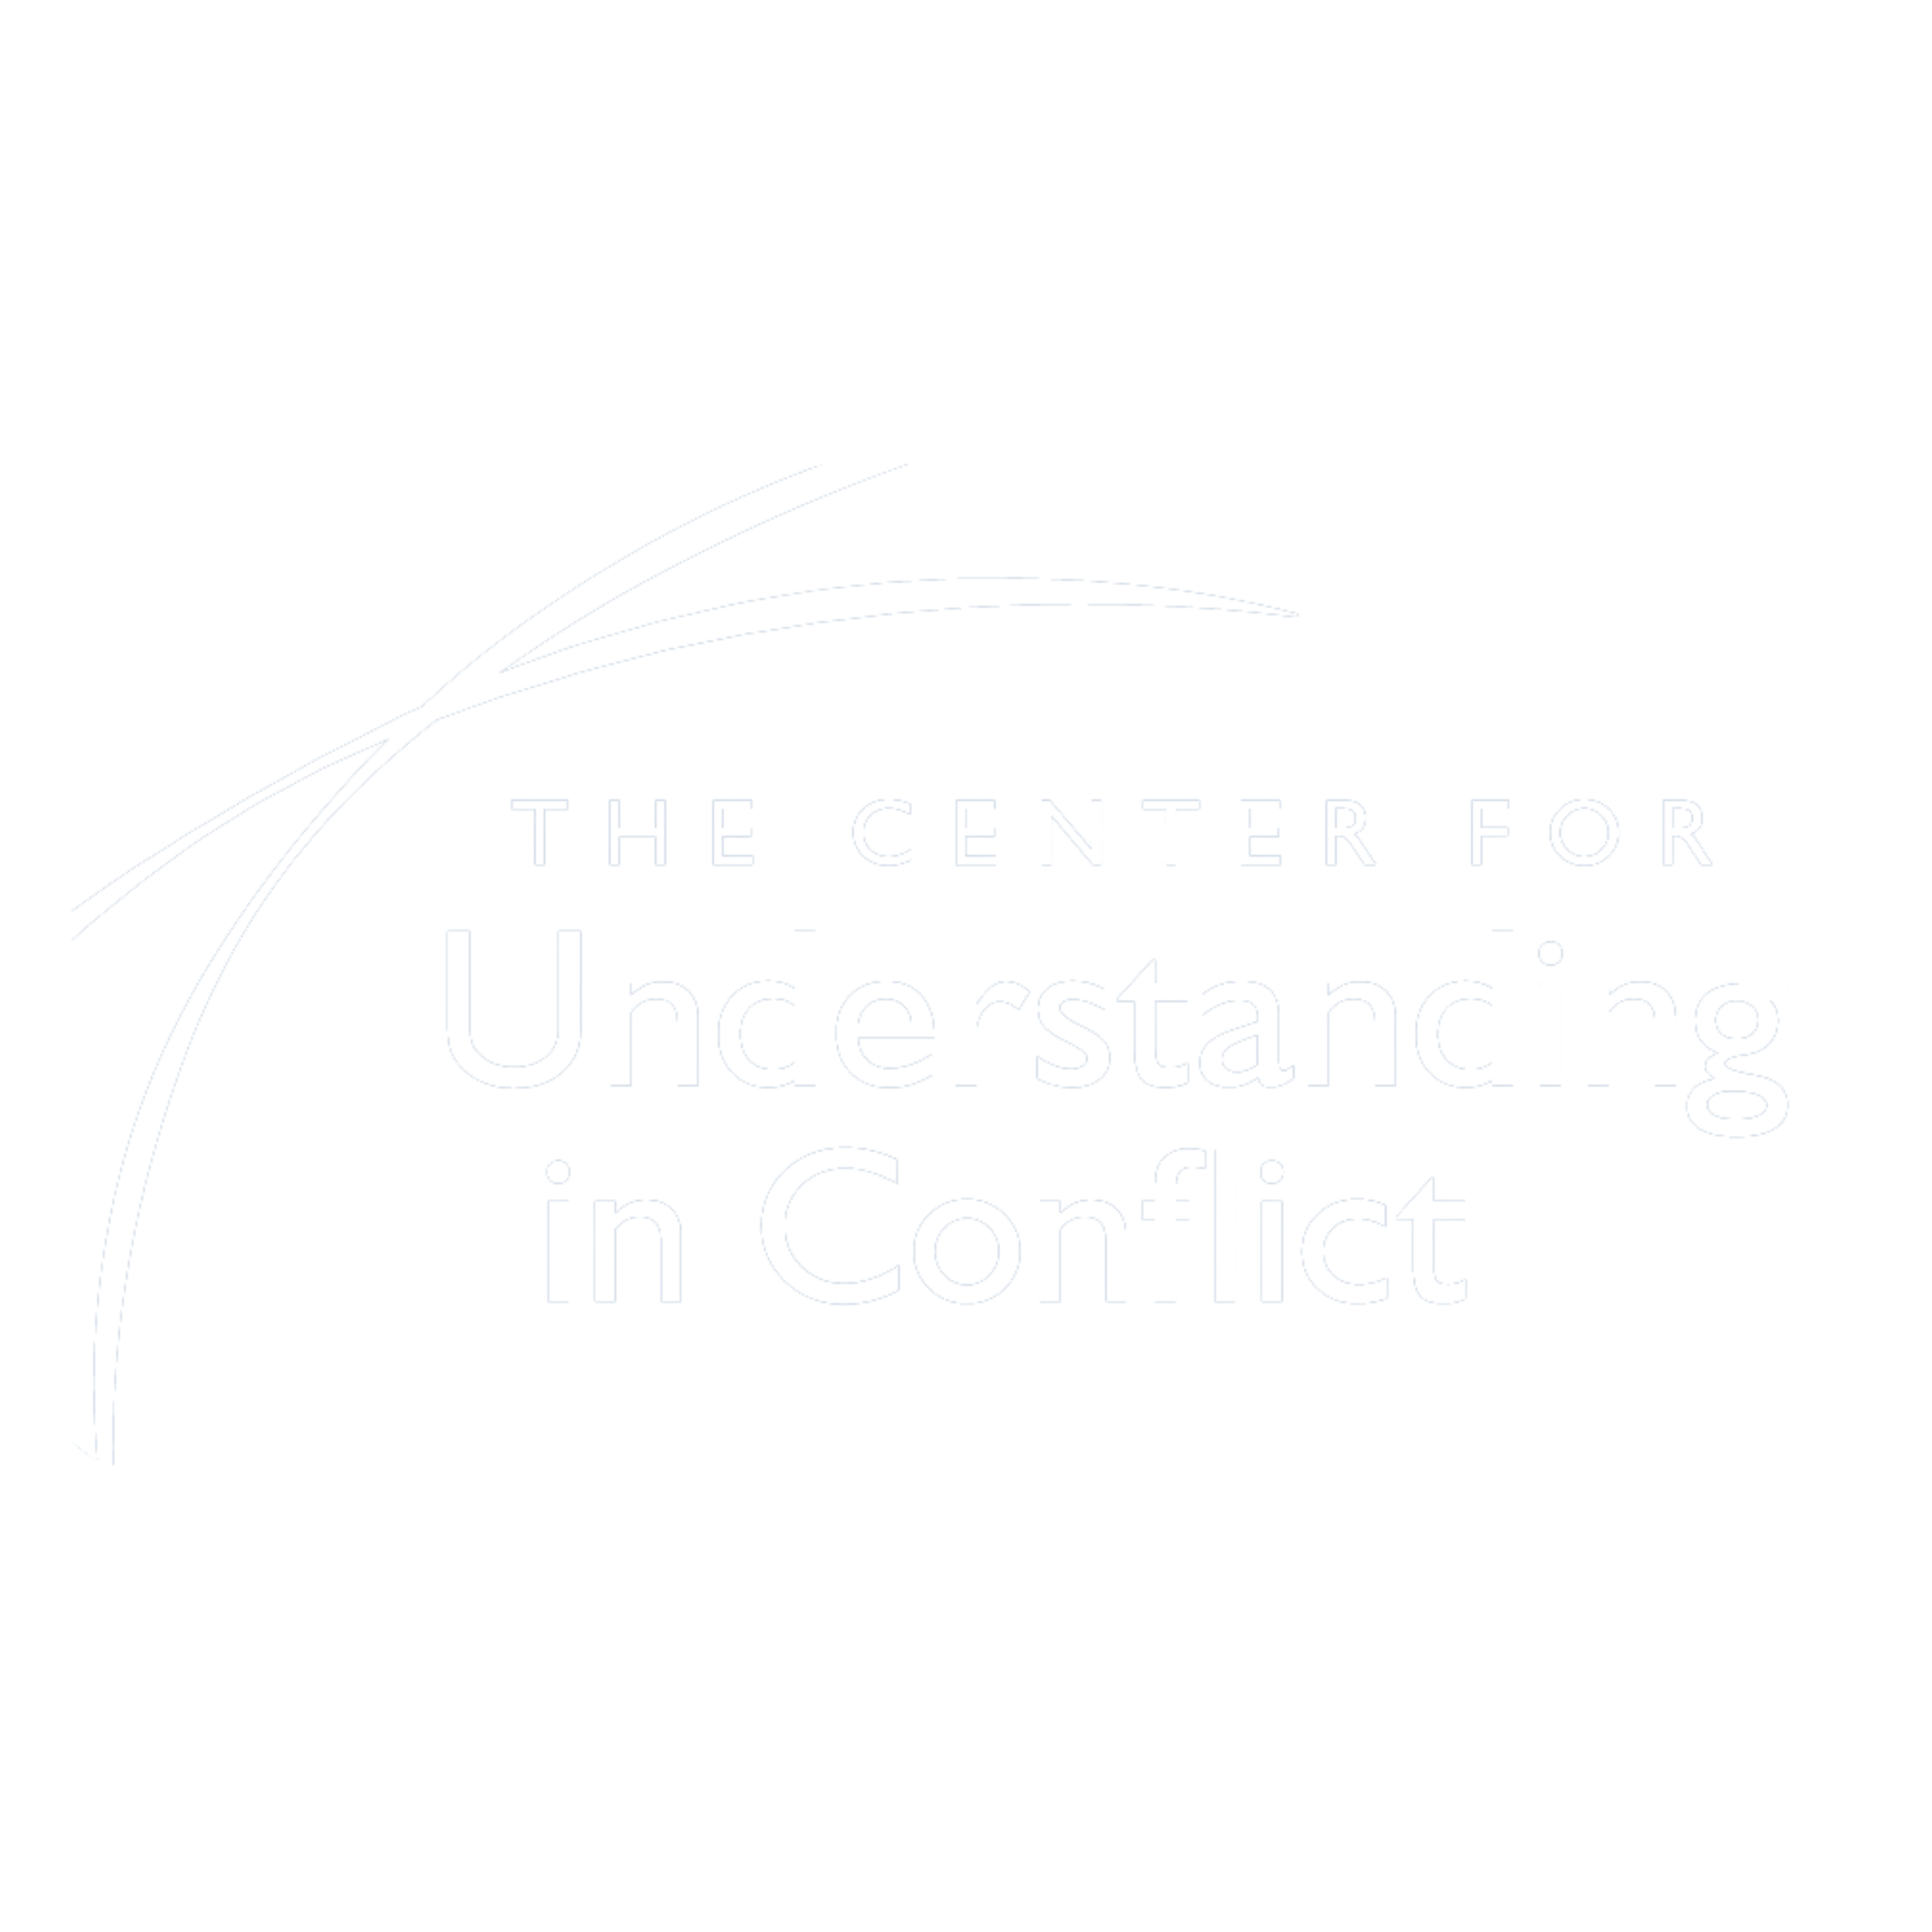 The Center for Understanding in Conflict